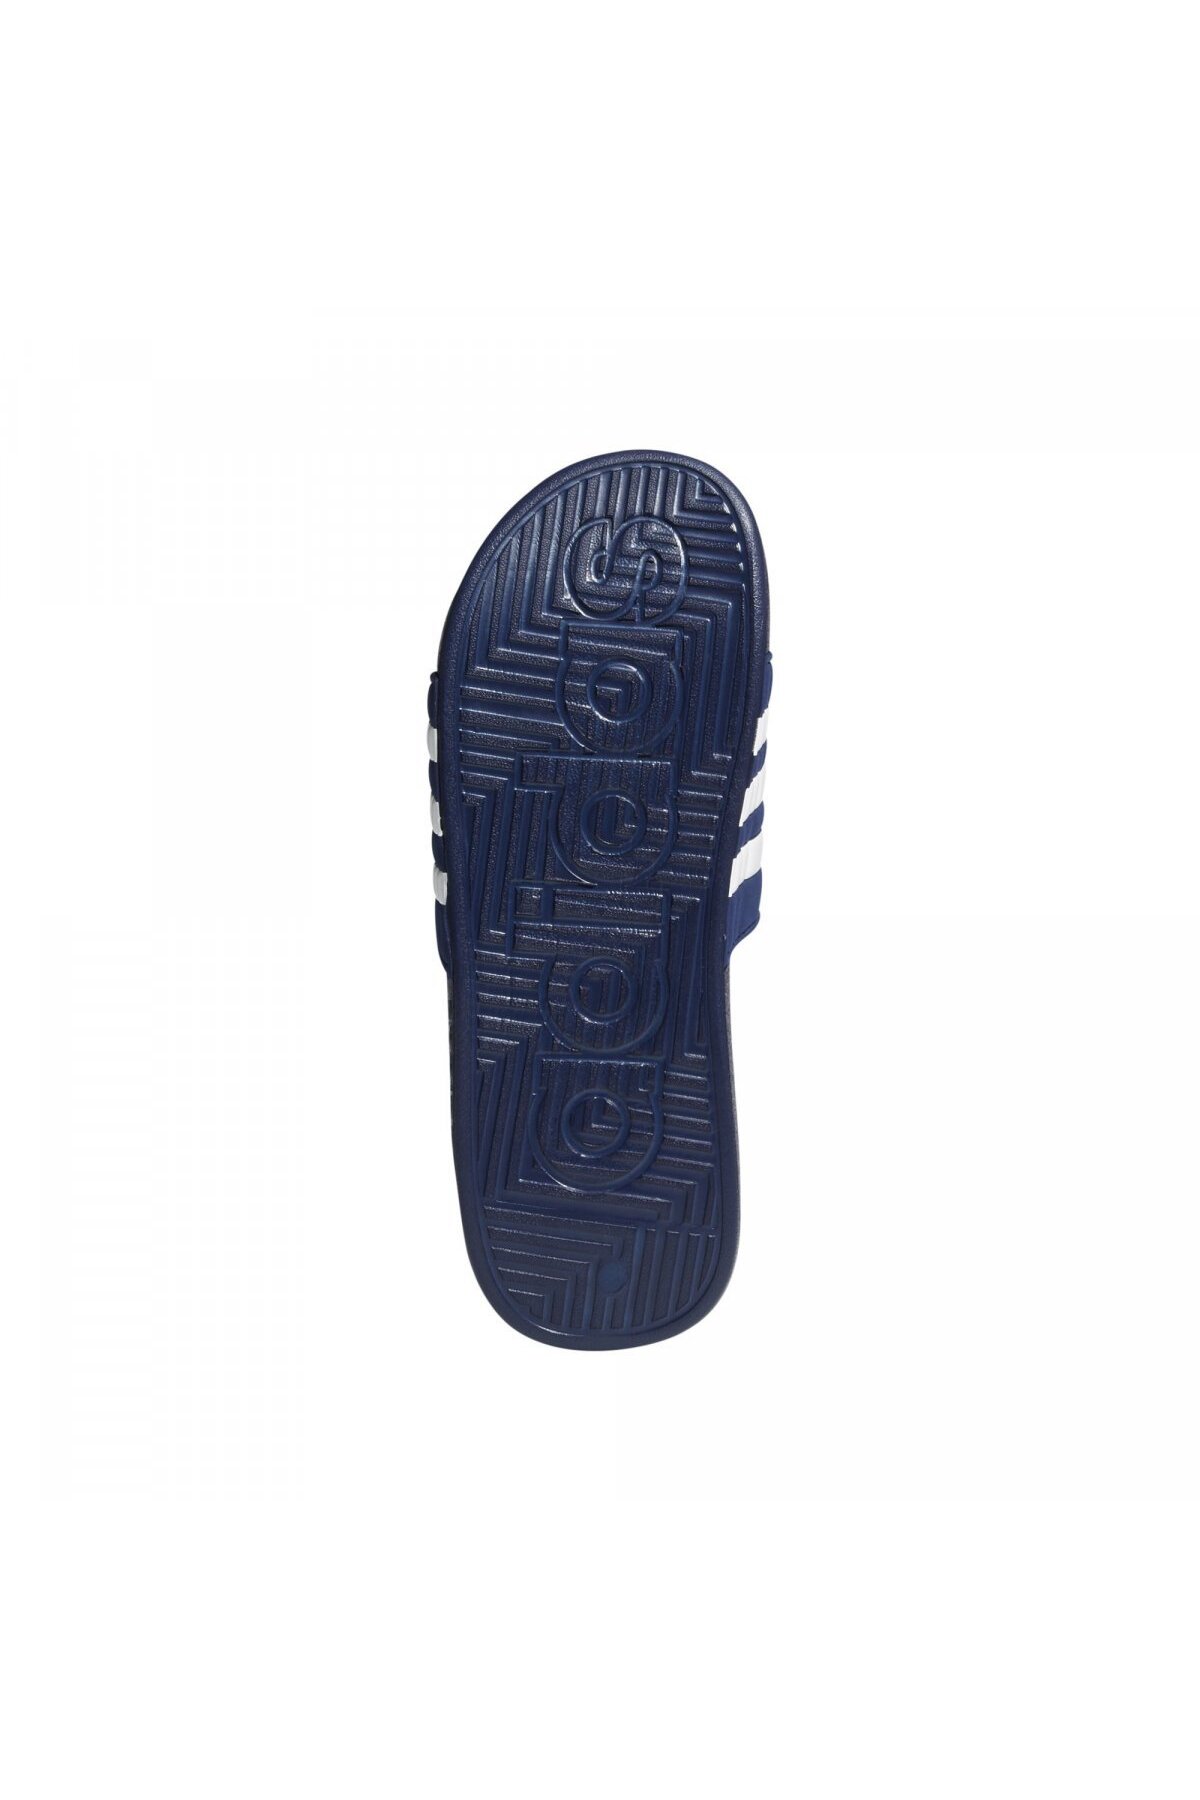 adidas Adissage Slipper Dark Navy Blue/White